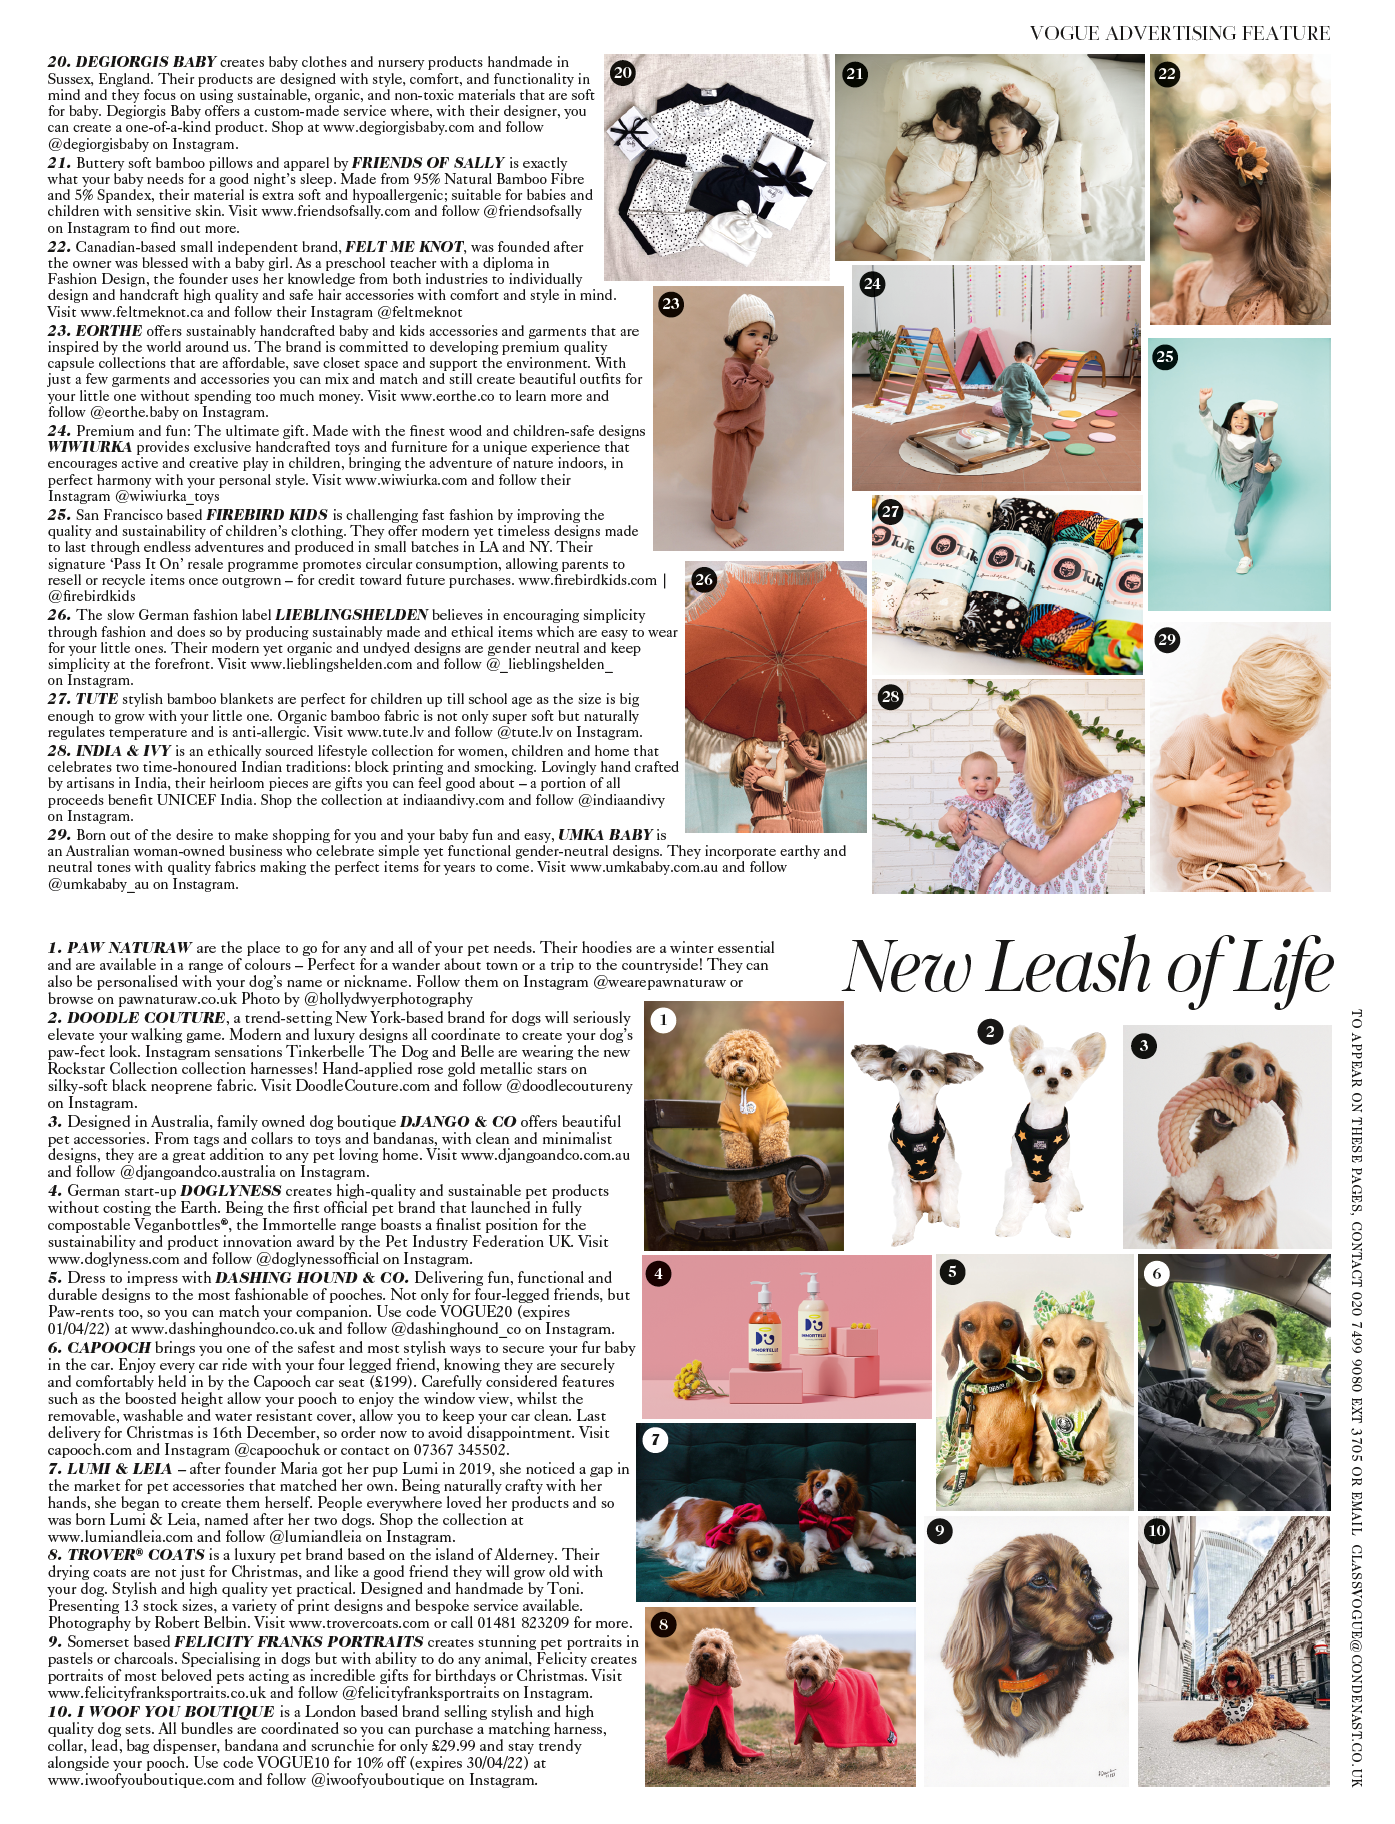 Doodle Couture featured in British Vogue Magazine